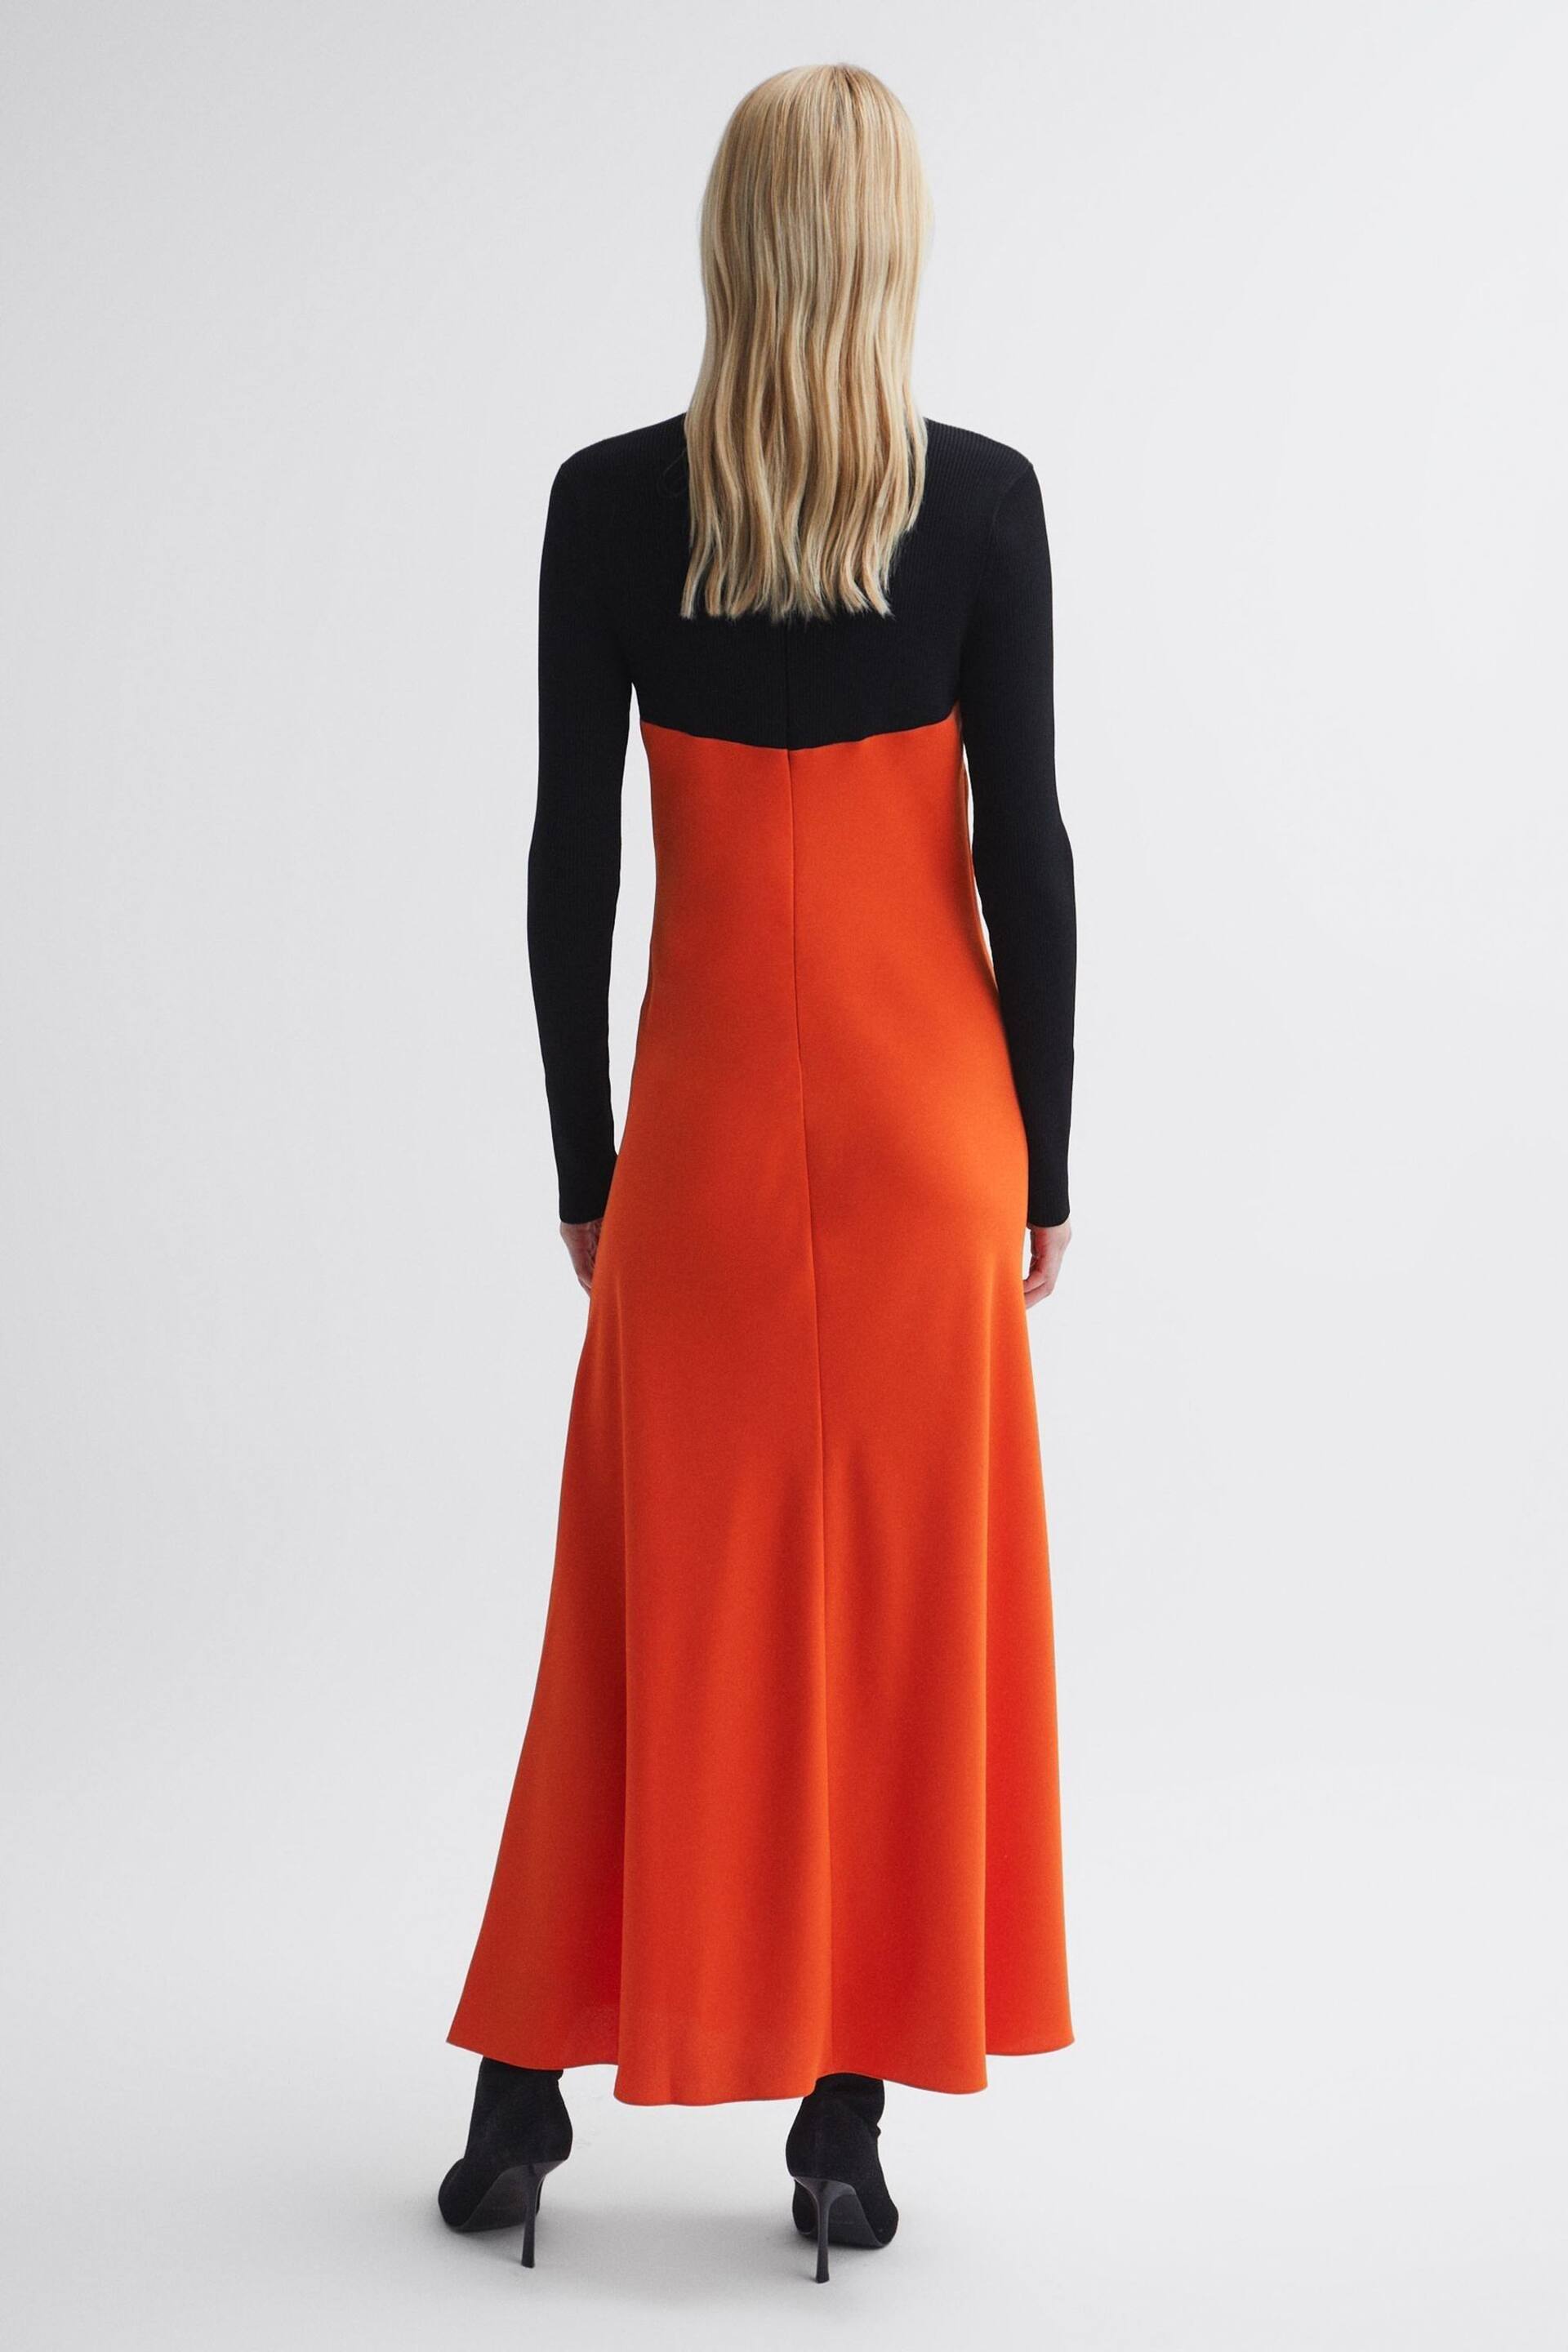 Florere Hybrid Knit Midi Dress - Image 2 of 5